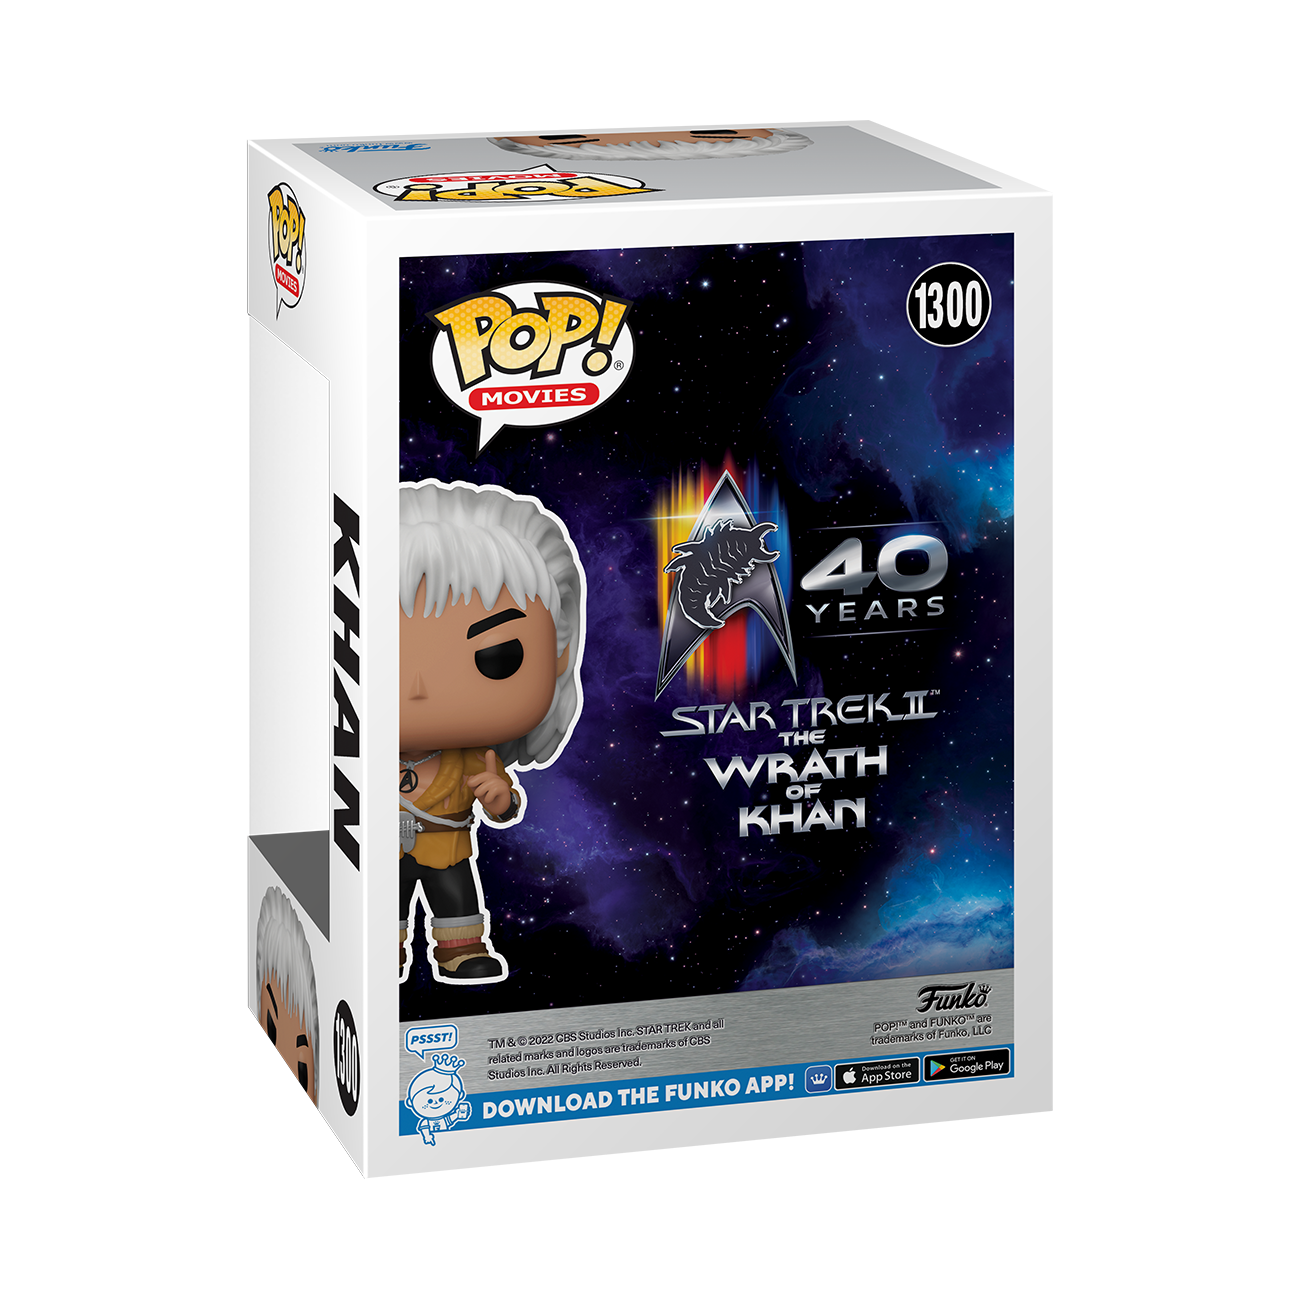 Star Trek II: The Wrath of Khan Funko POP! exklusiv - 40th Anniversary Limited Edition Figur